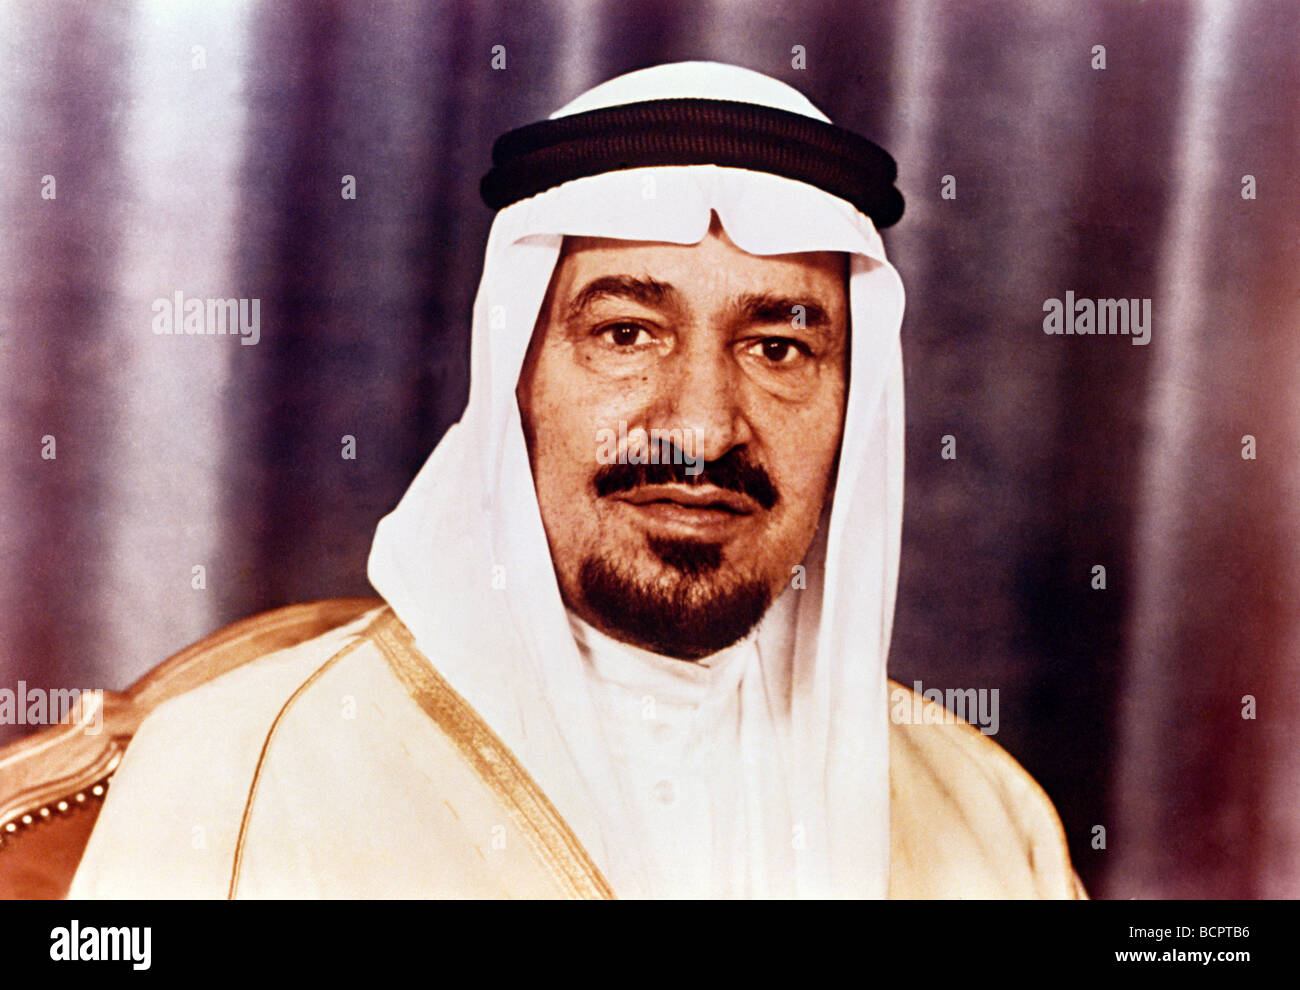 Saudi Arabia Hm King Khaled <b>Bin Abdul</b> Aziz - saudi-arabia-hm-king-khaled-bin-abdul-aziz-BCPTB6